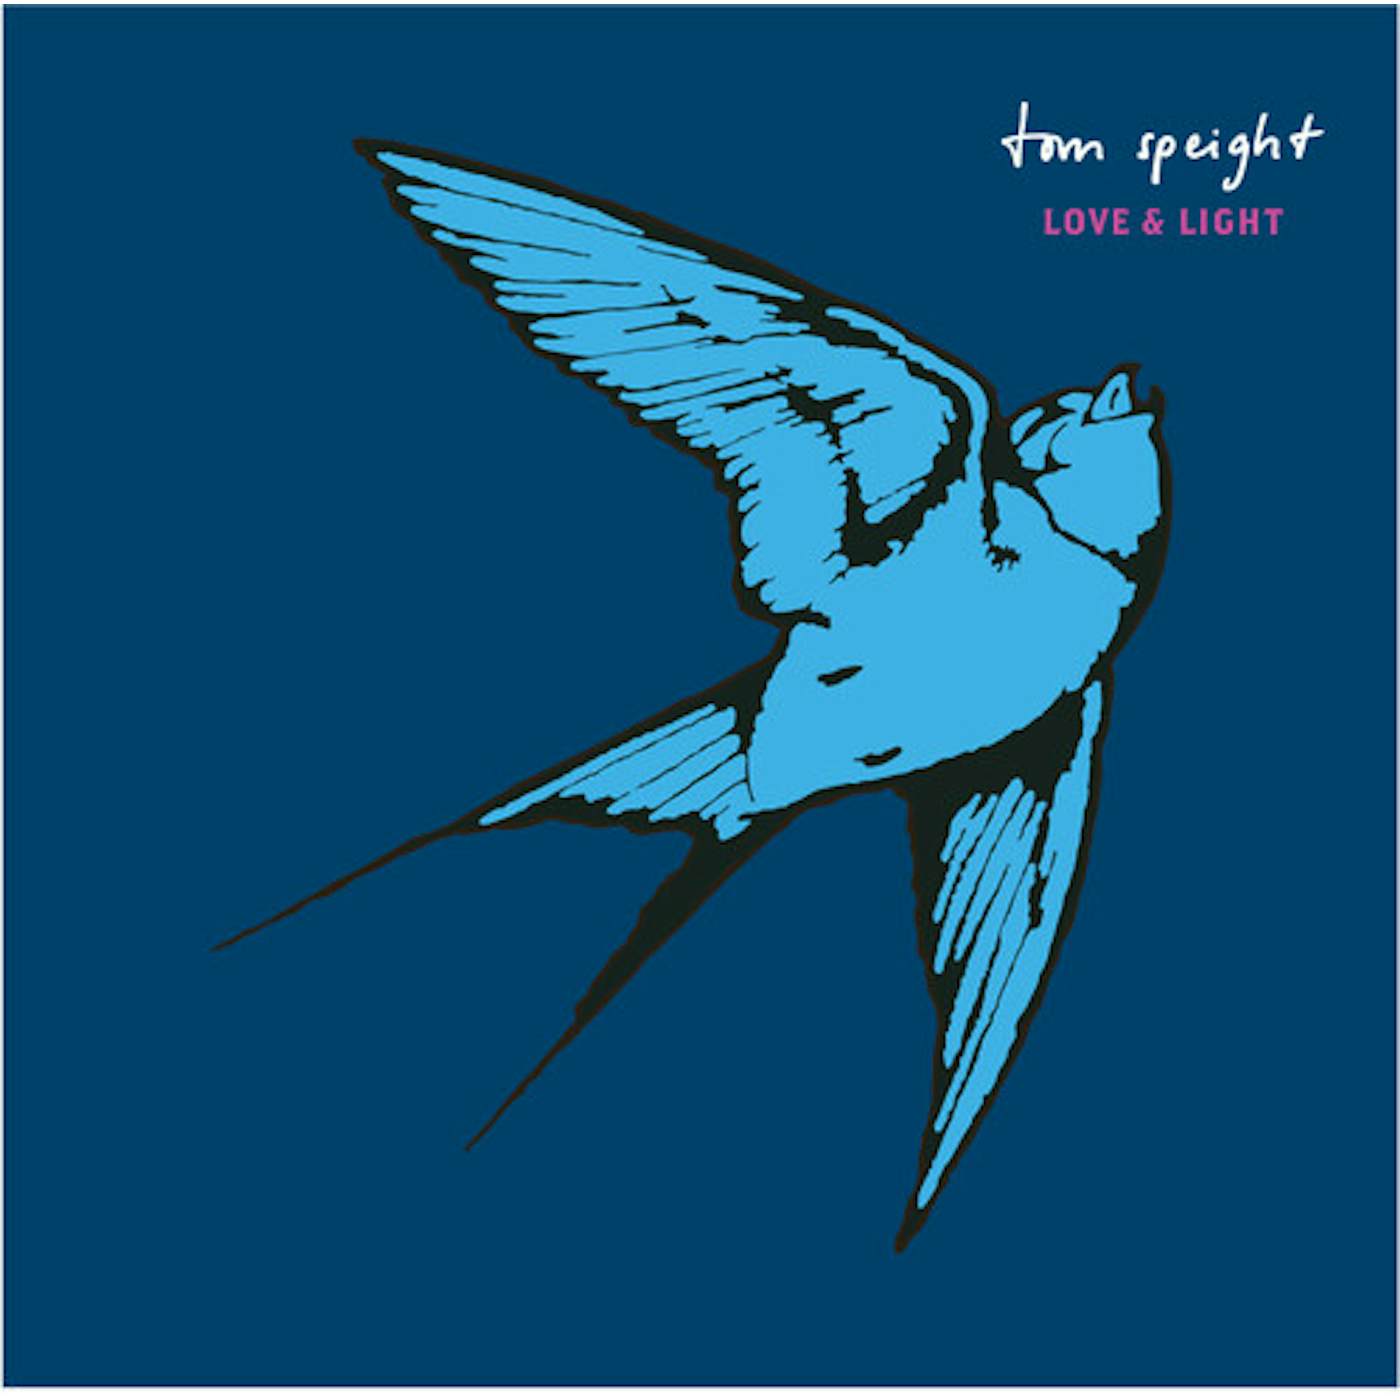 Tom Speight LOVE & LIGHT CD